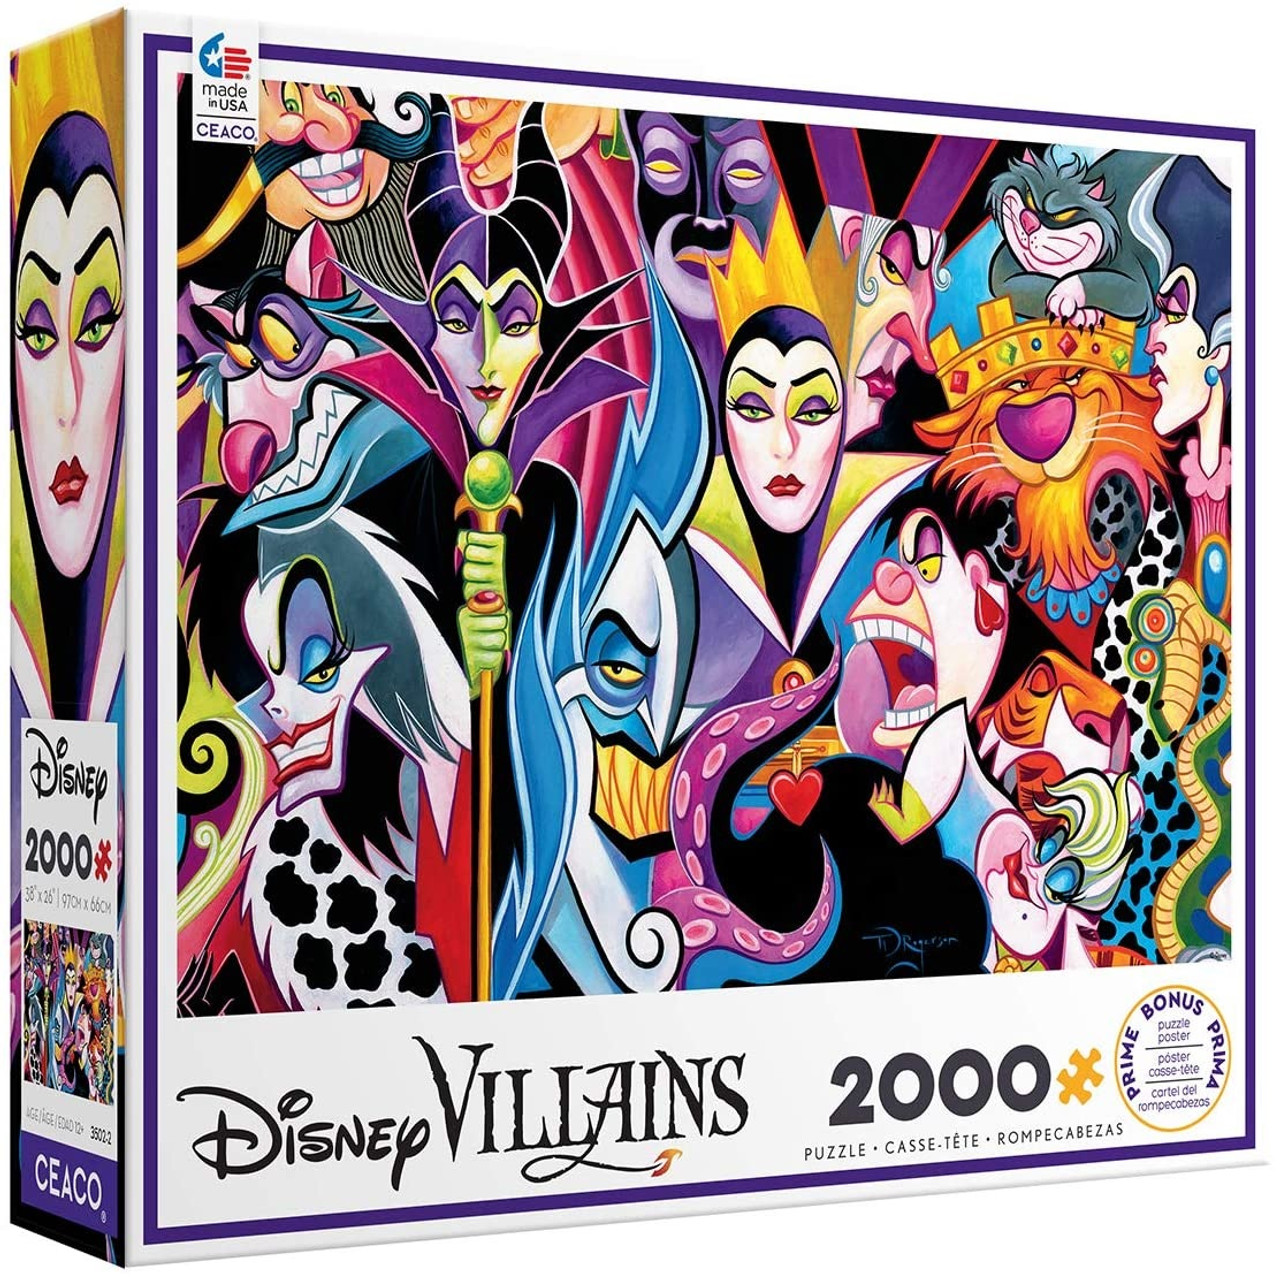 Disney Villains Jigsaw Puzzle by Ceaco | shopDisney